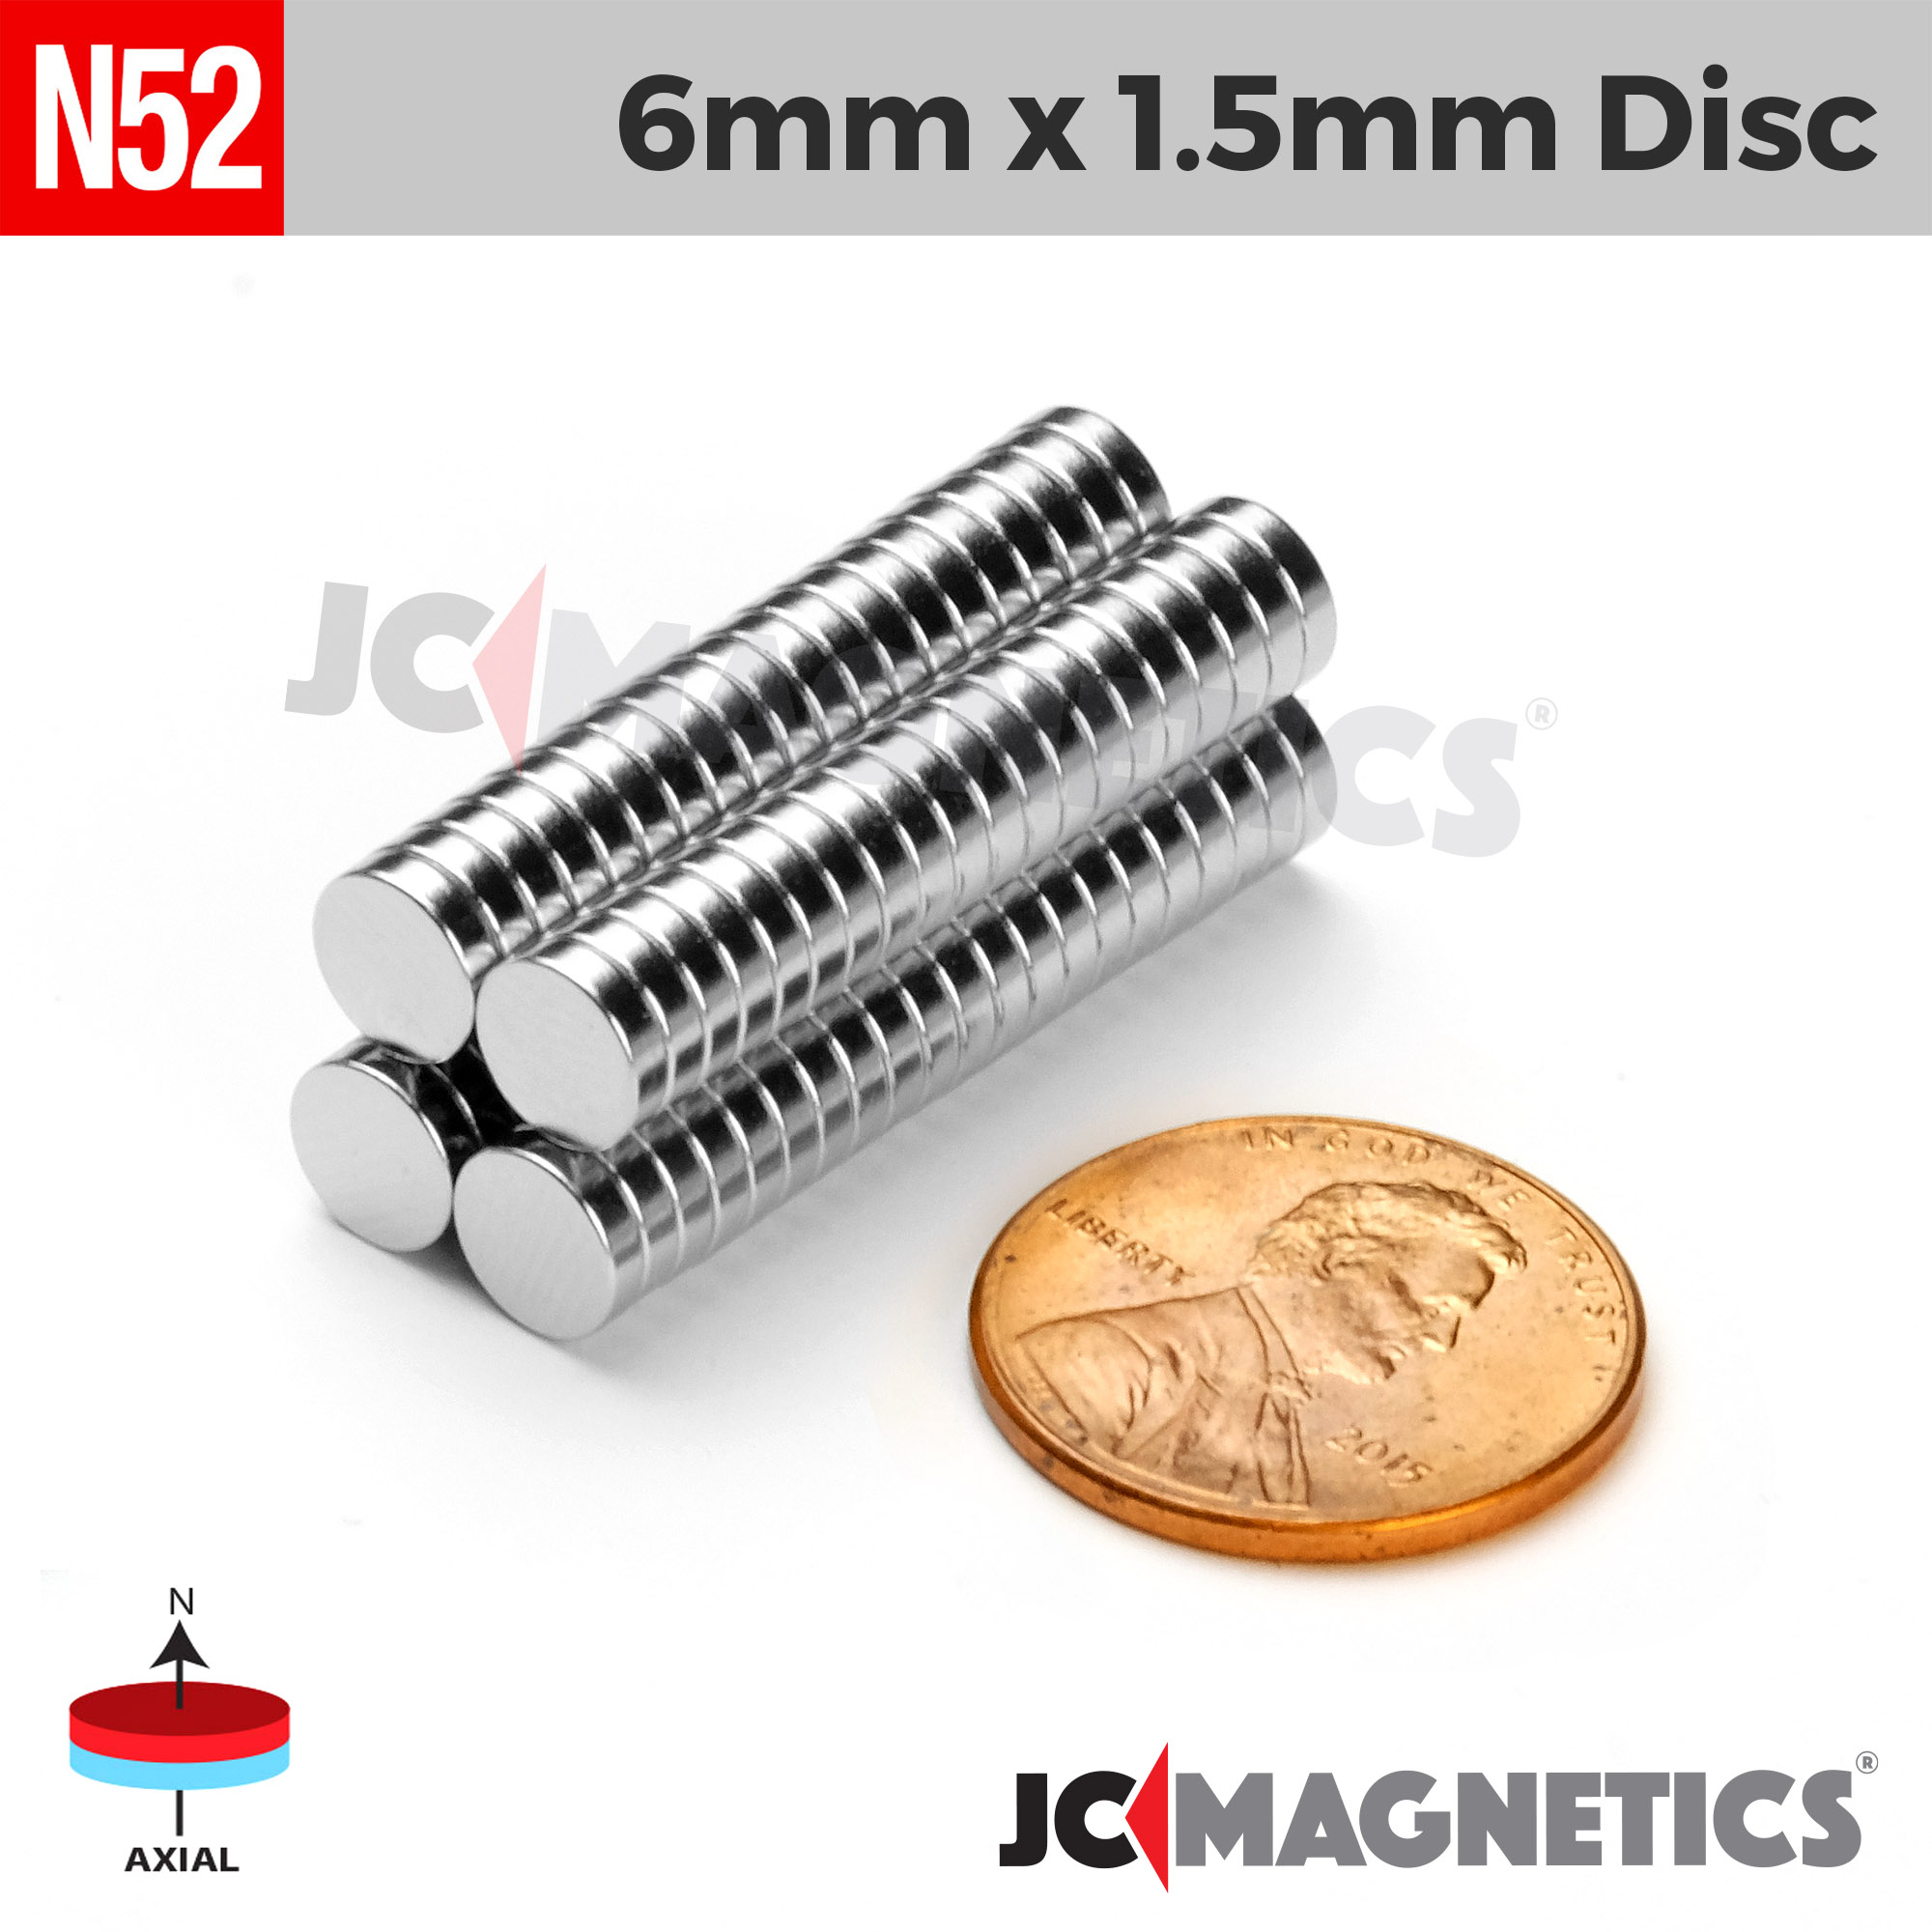 https://jc-magnetics.com/image/cache/catalog/magnets/6mmx1_5nnm-magnet-disc-2000x2000.jpg